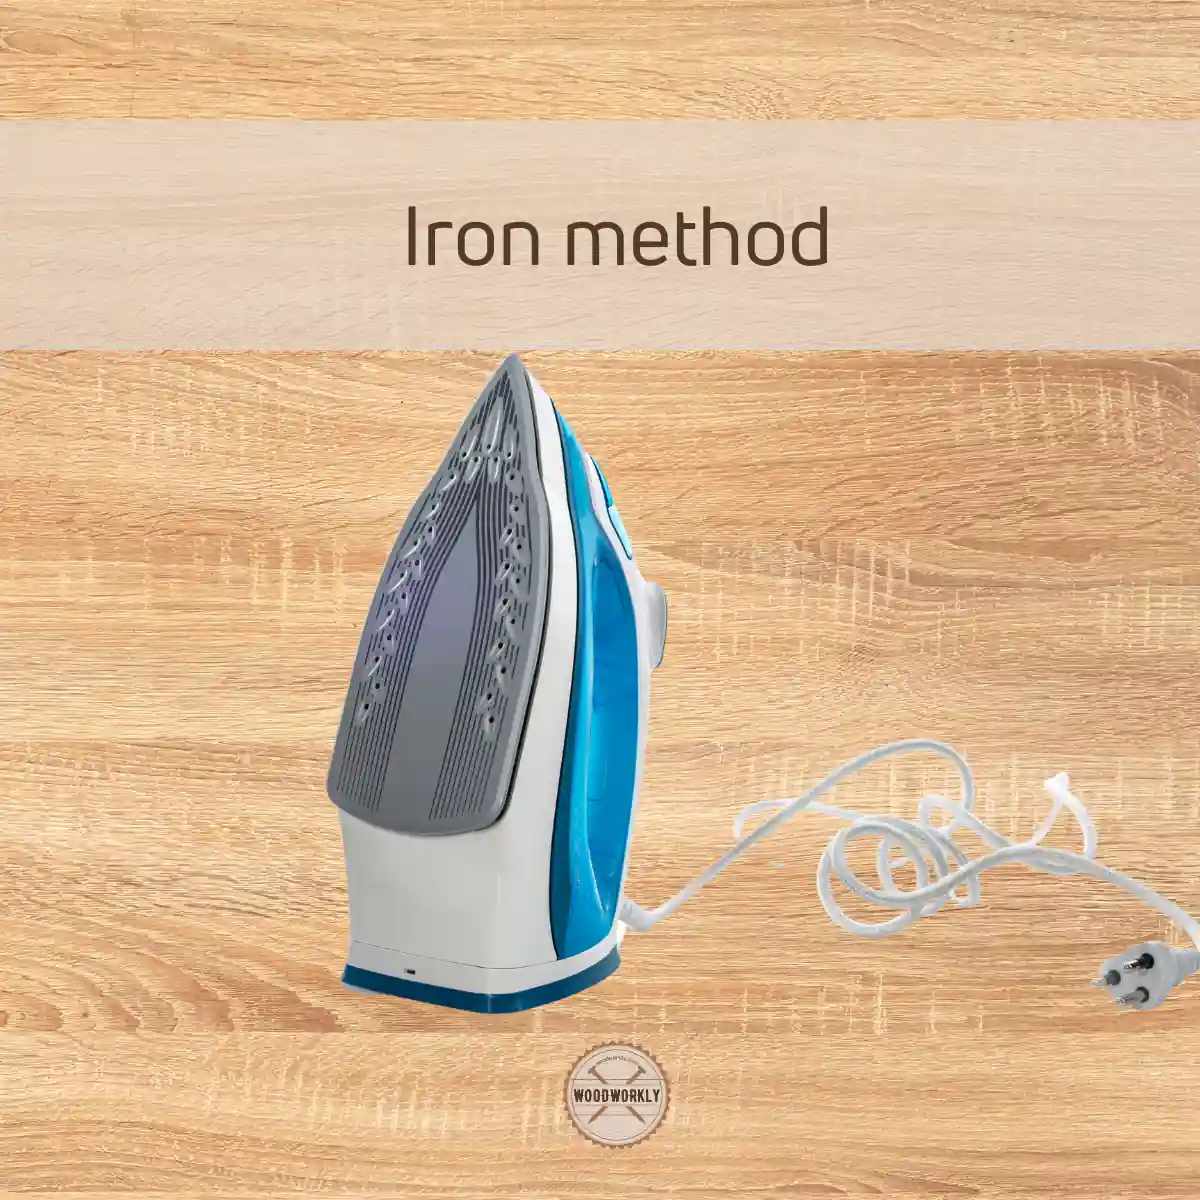 Iron method